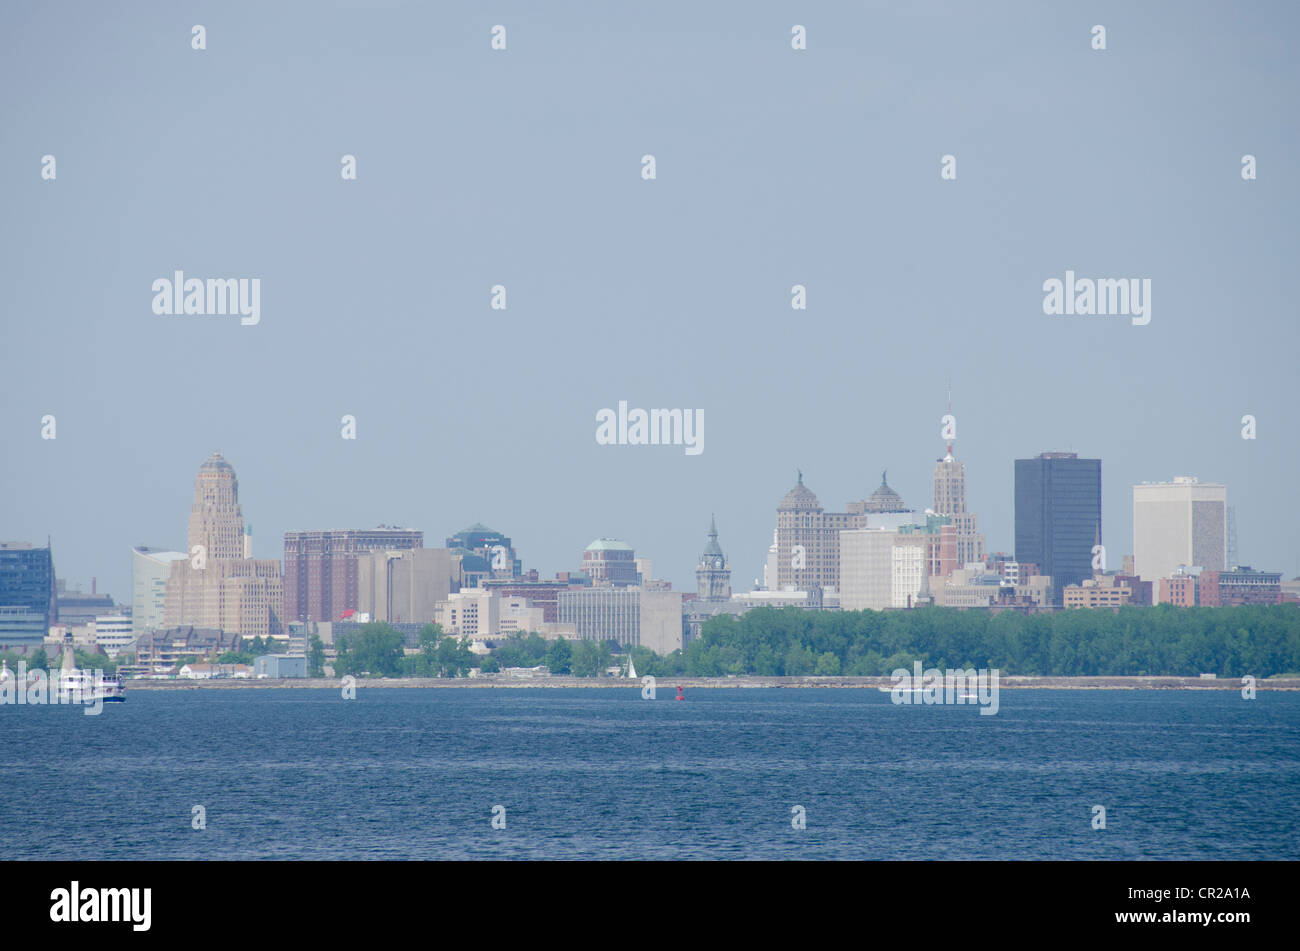 New York, Buffalo. Lake Erie view of historic downtown Buffalo skyline. Stock Photo